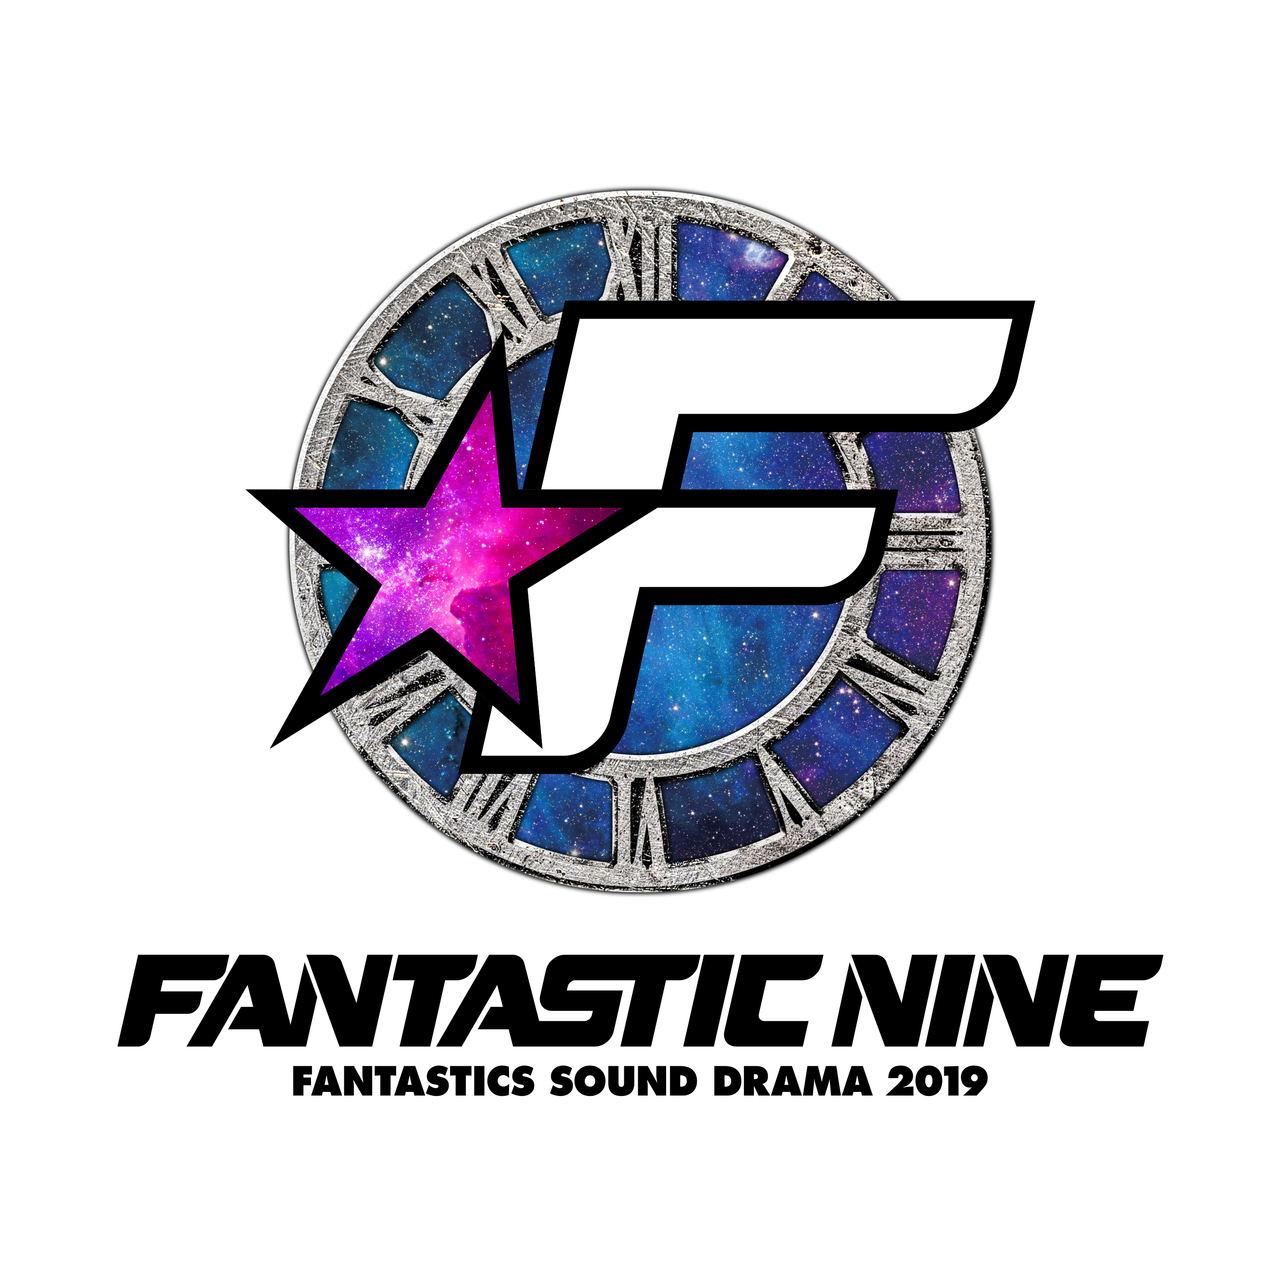 FANTASTICS SOUND DRAMA 2019 FANTASTIC NINE | EXILE TRIBE Wiki | Fandom